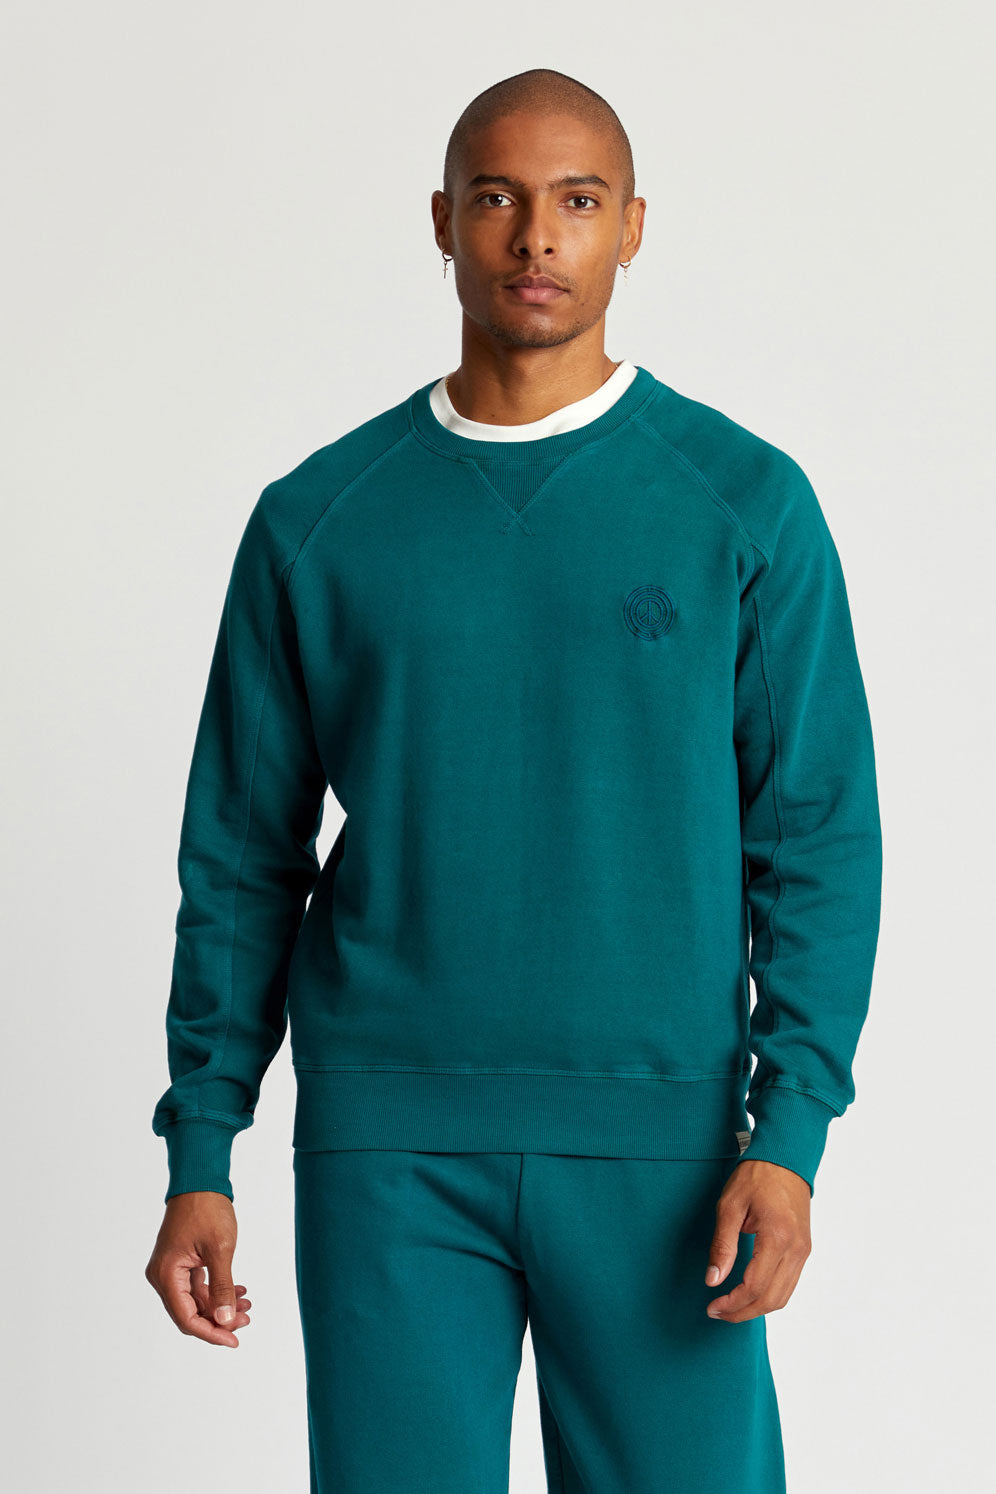 ANTON Sweatshirt Mens - GOTS Organic Cotton Teal Green, Medium